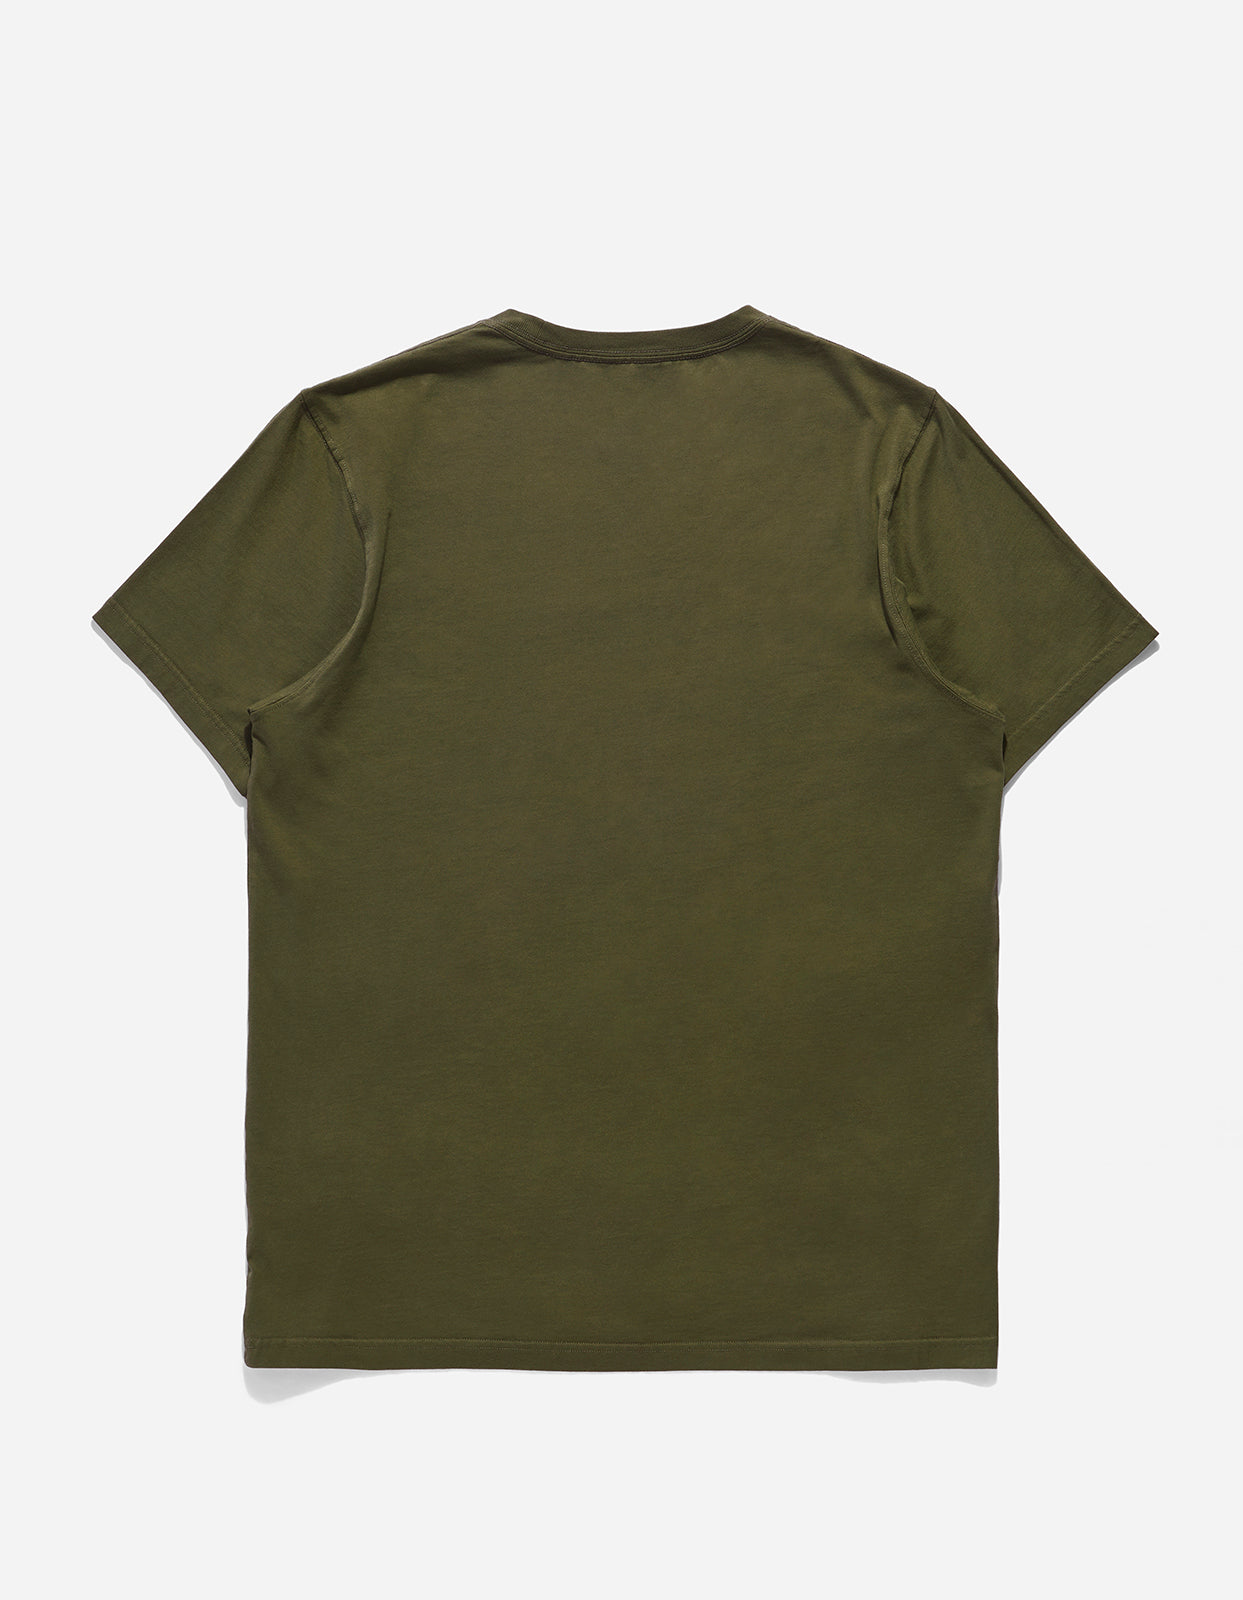 Maharishi | MILTYPE Embroidered T-Shirt Olive OG-107F